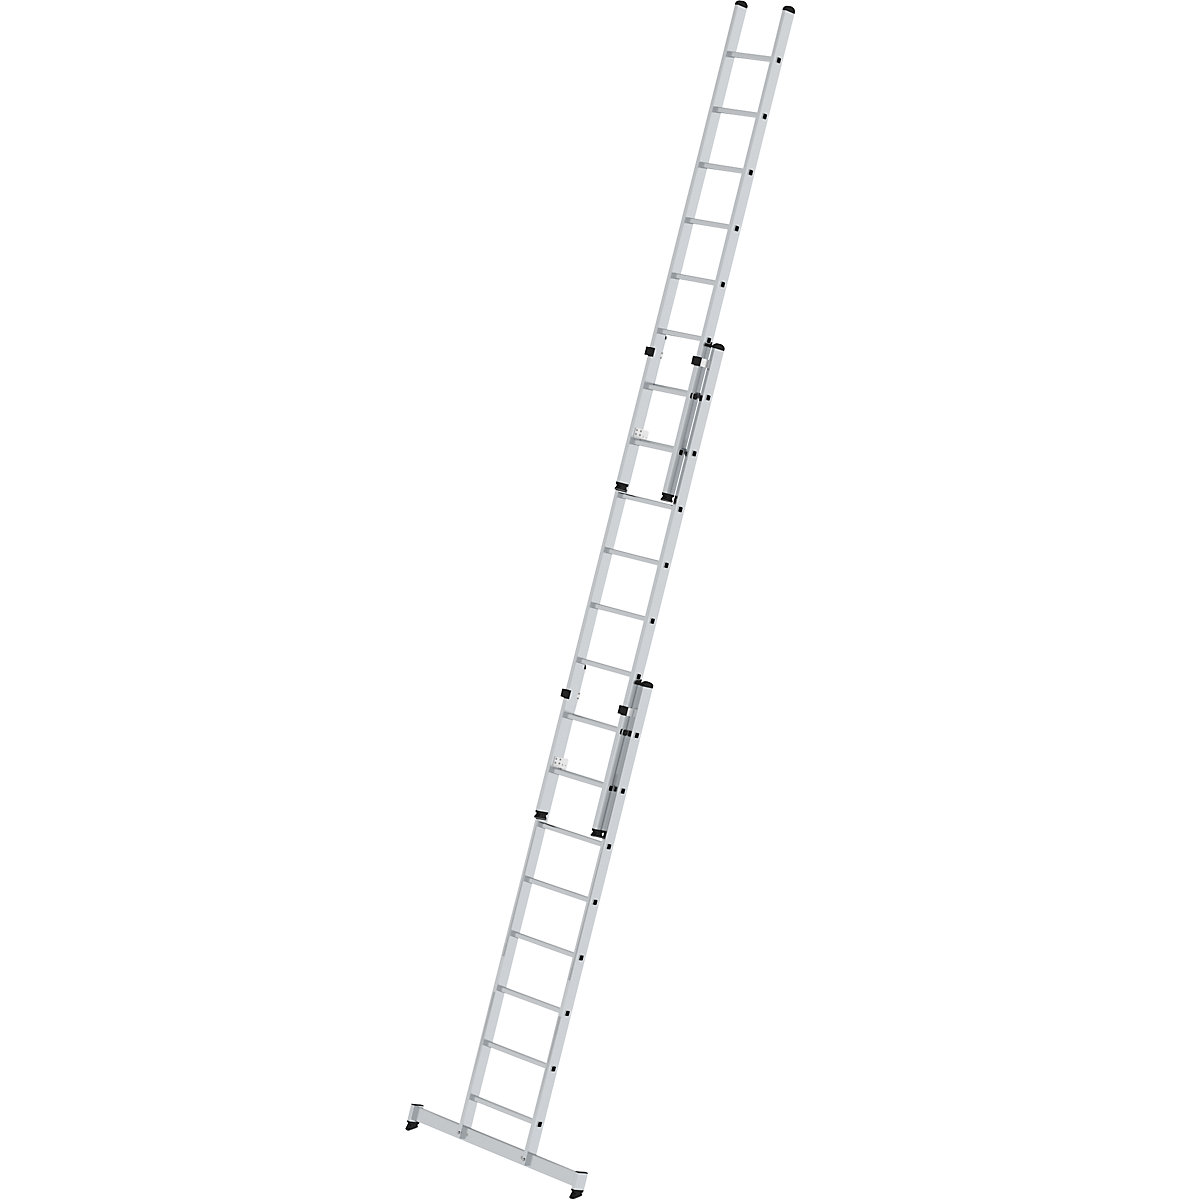 Height adjustable lean-to ladder - MUNK